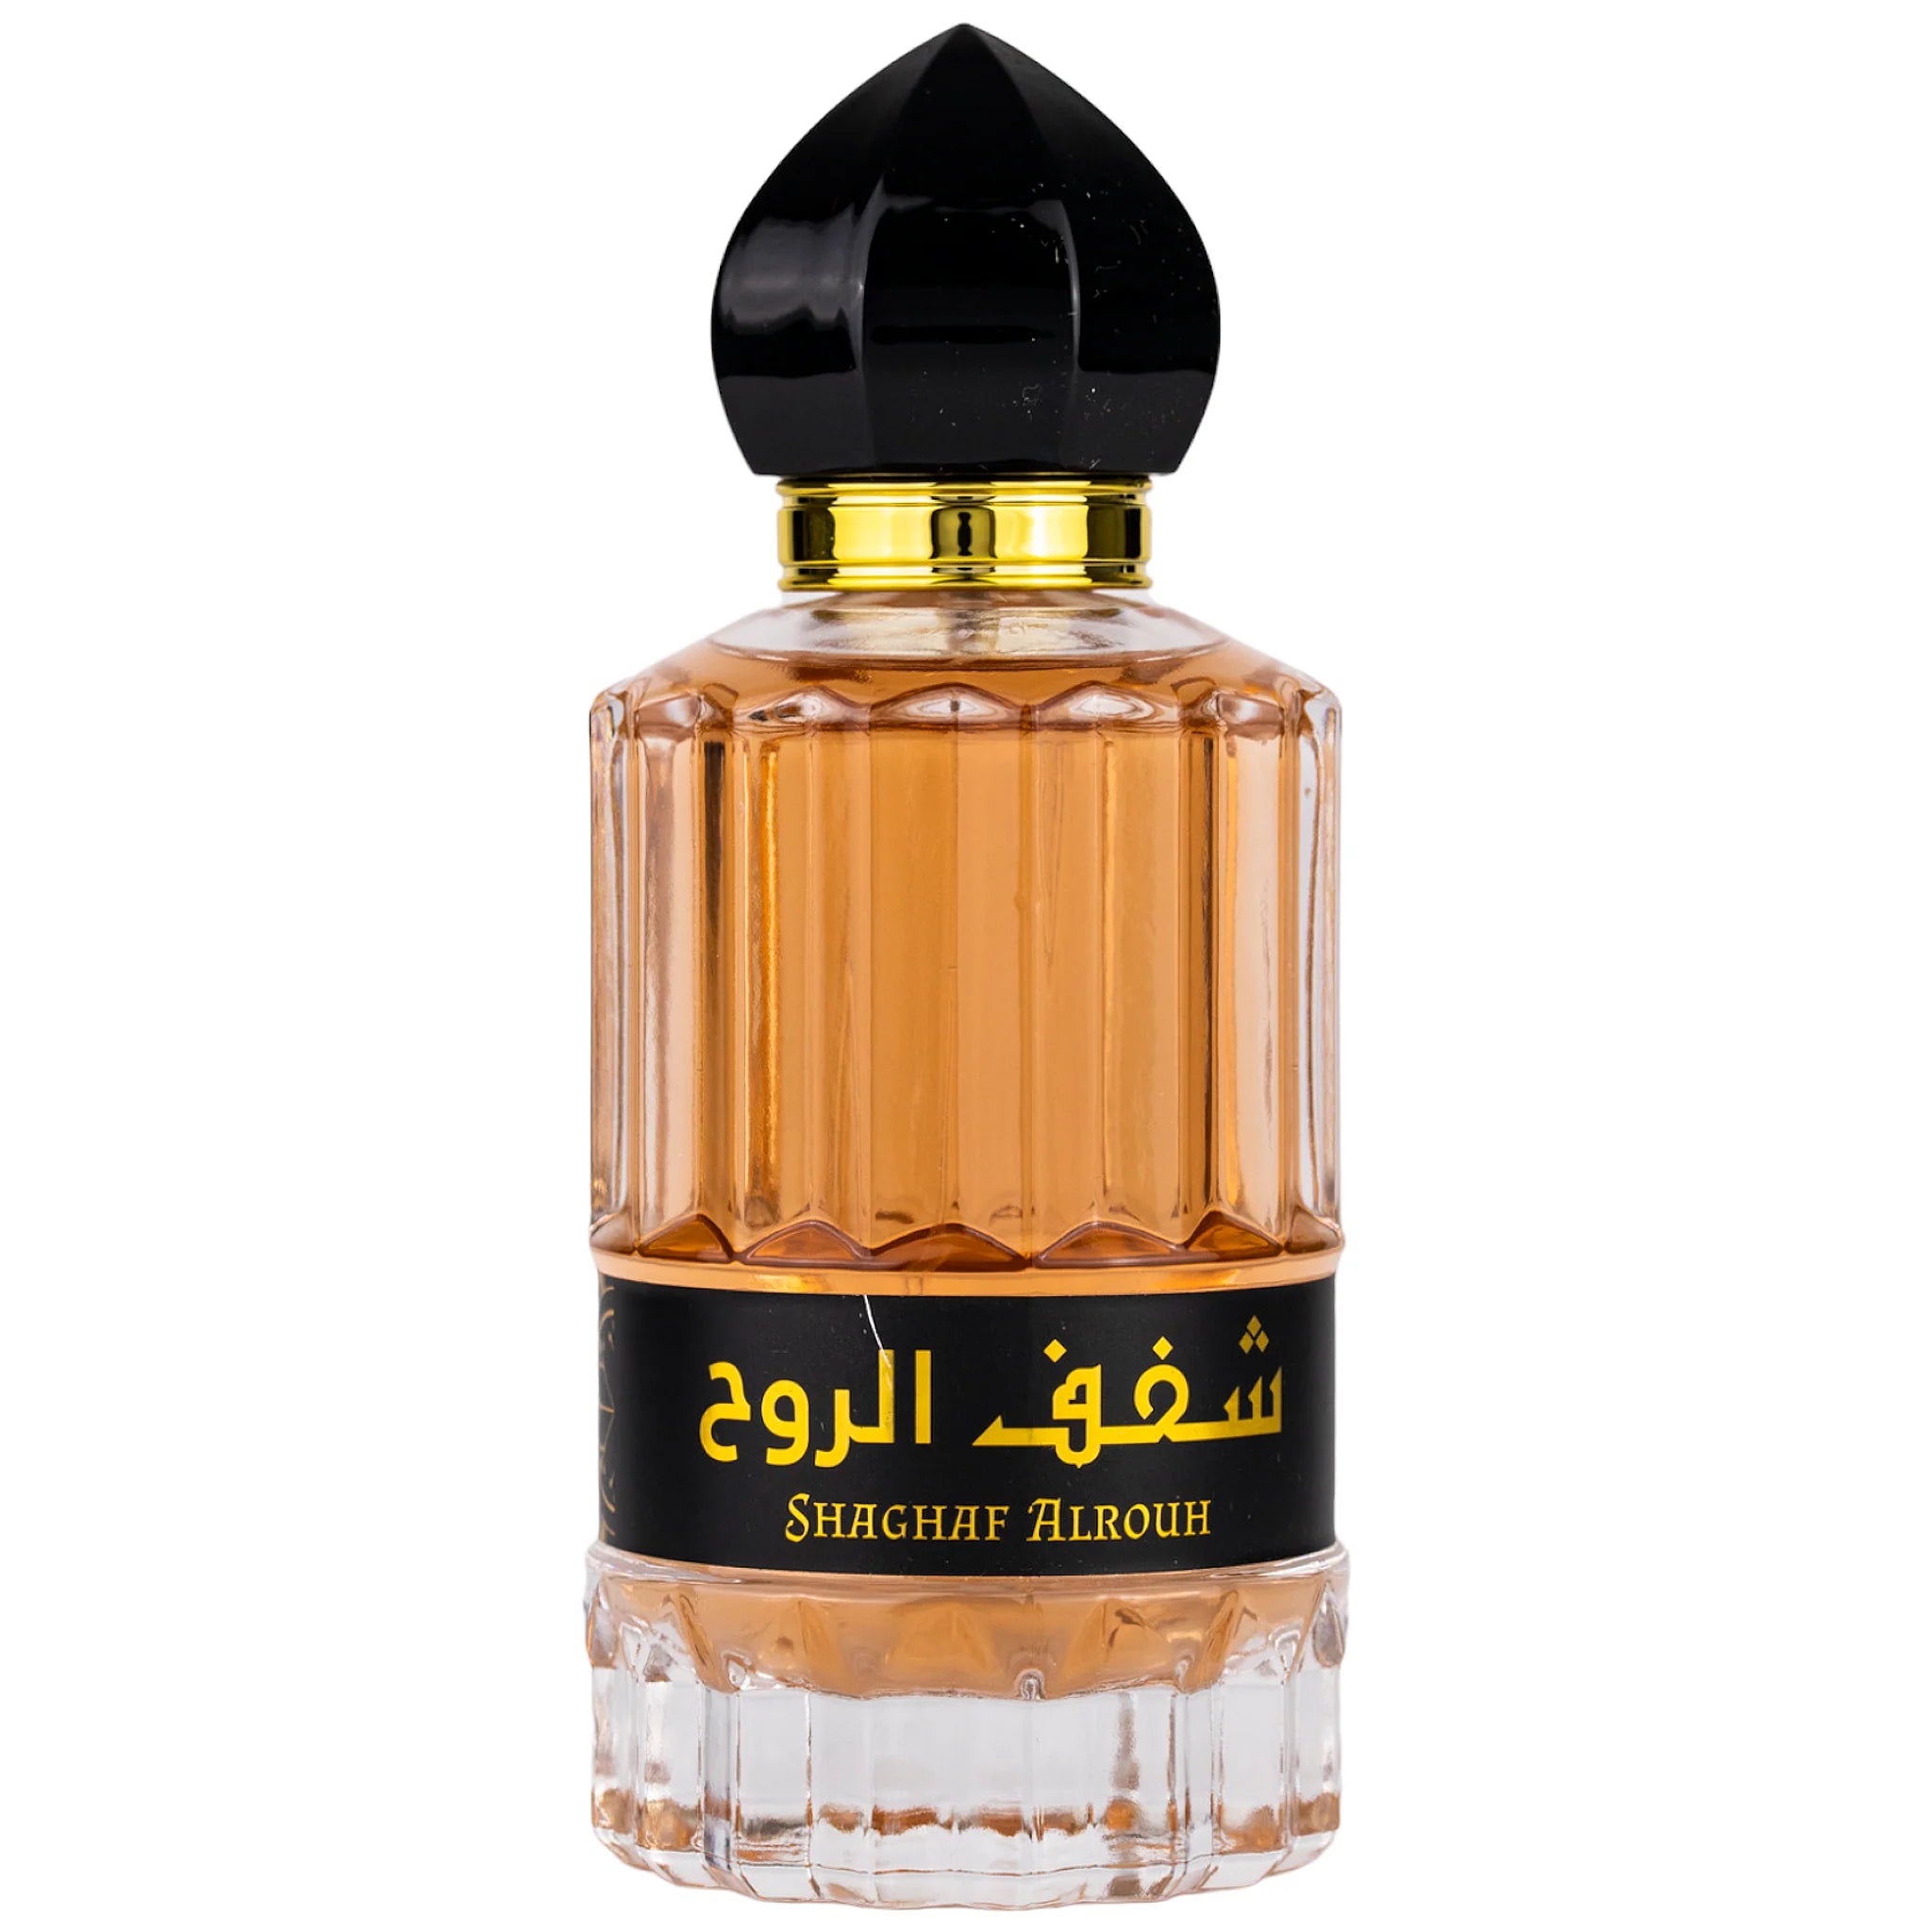 Shaghaf Alrouh Perfume For Women